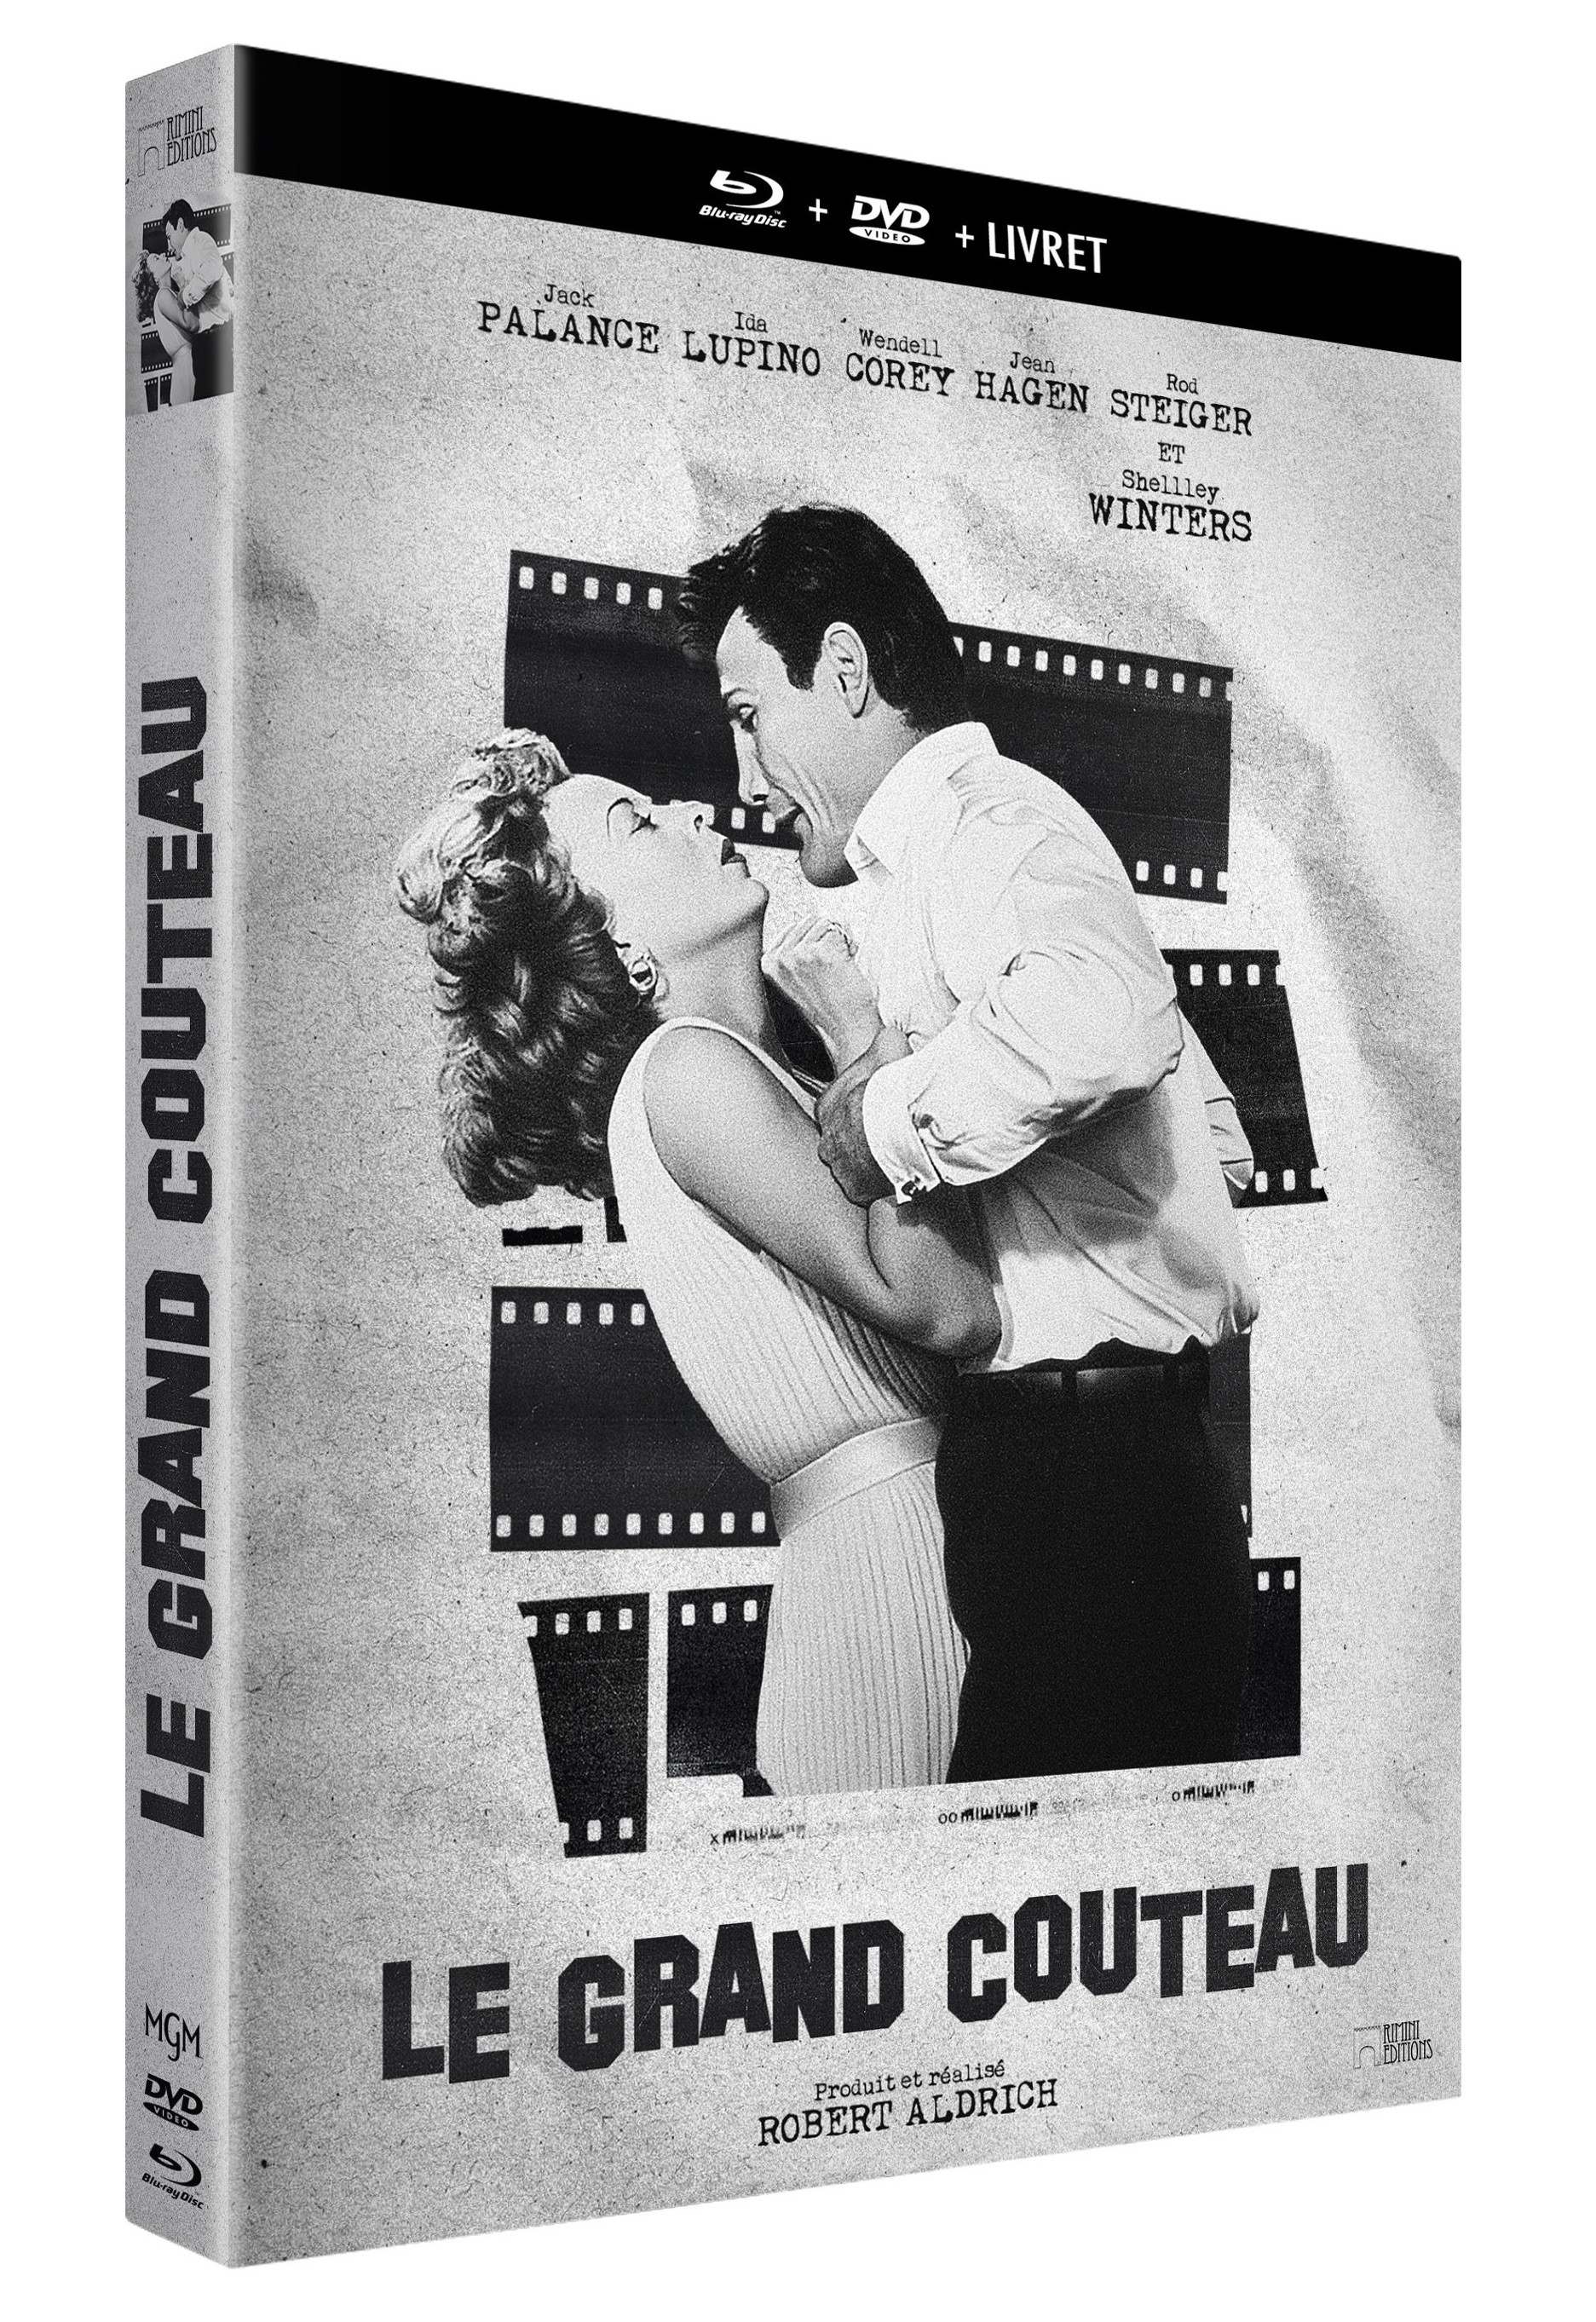 LE GRAND COUTEAU - COMBO DVD + BD - EDITION LIMITEE